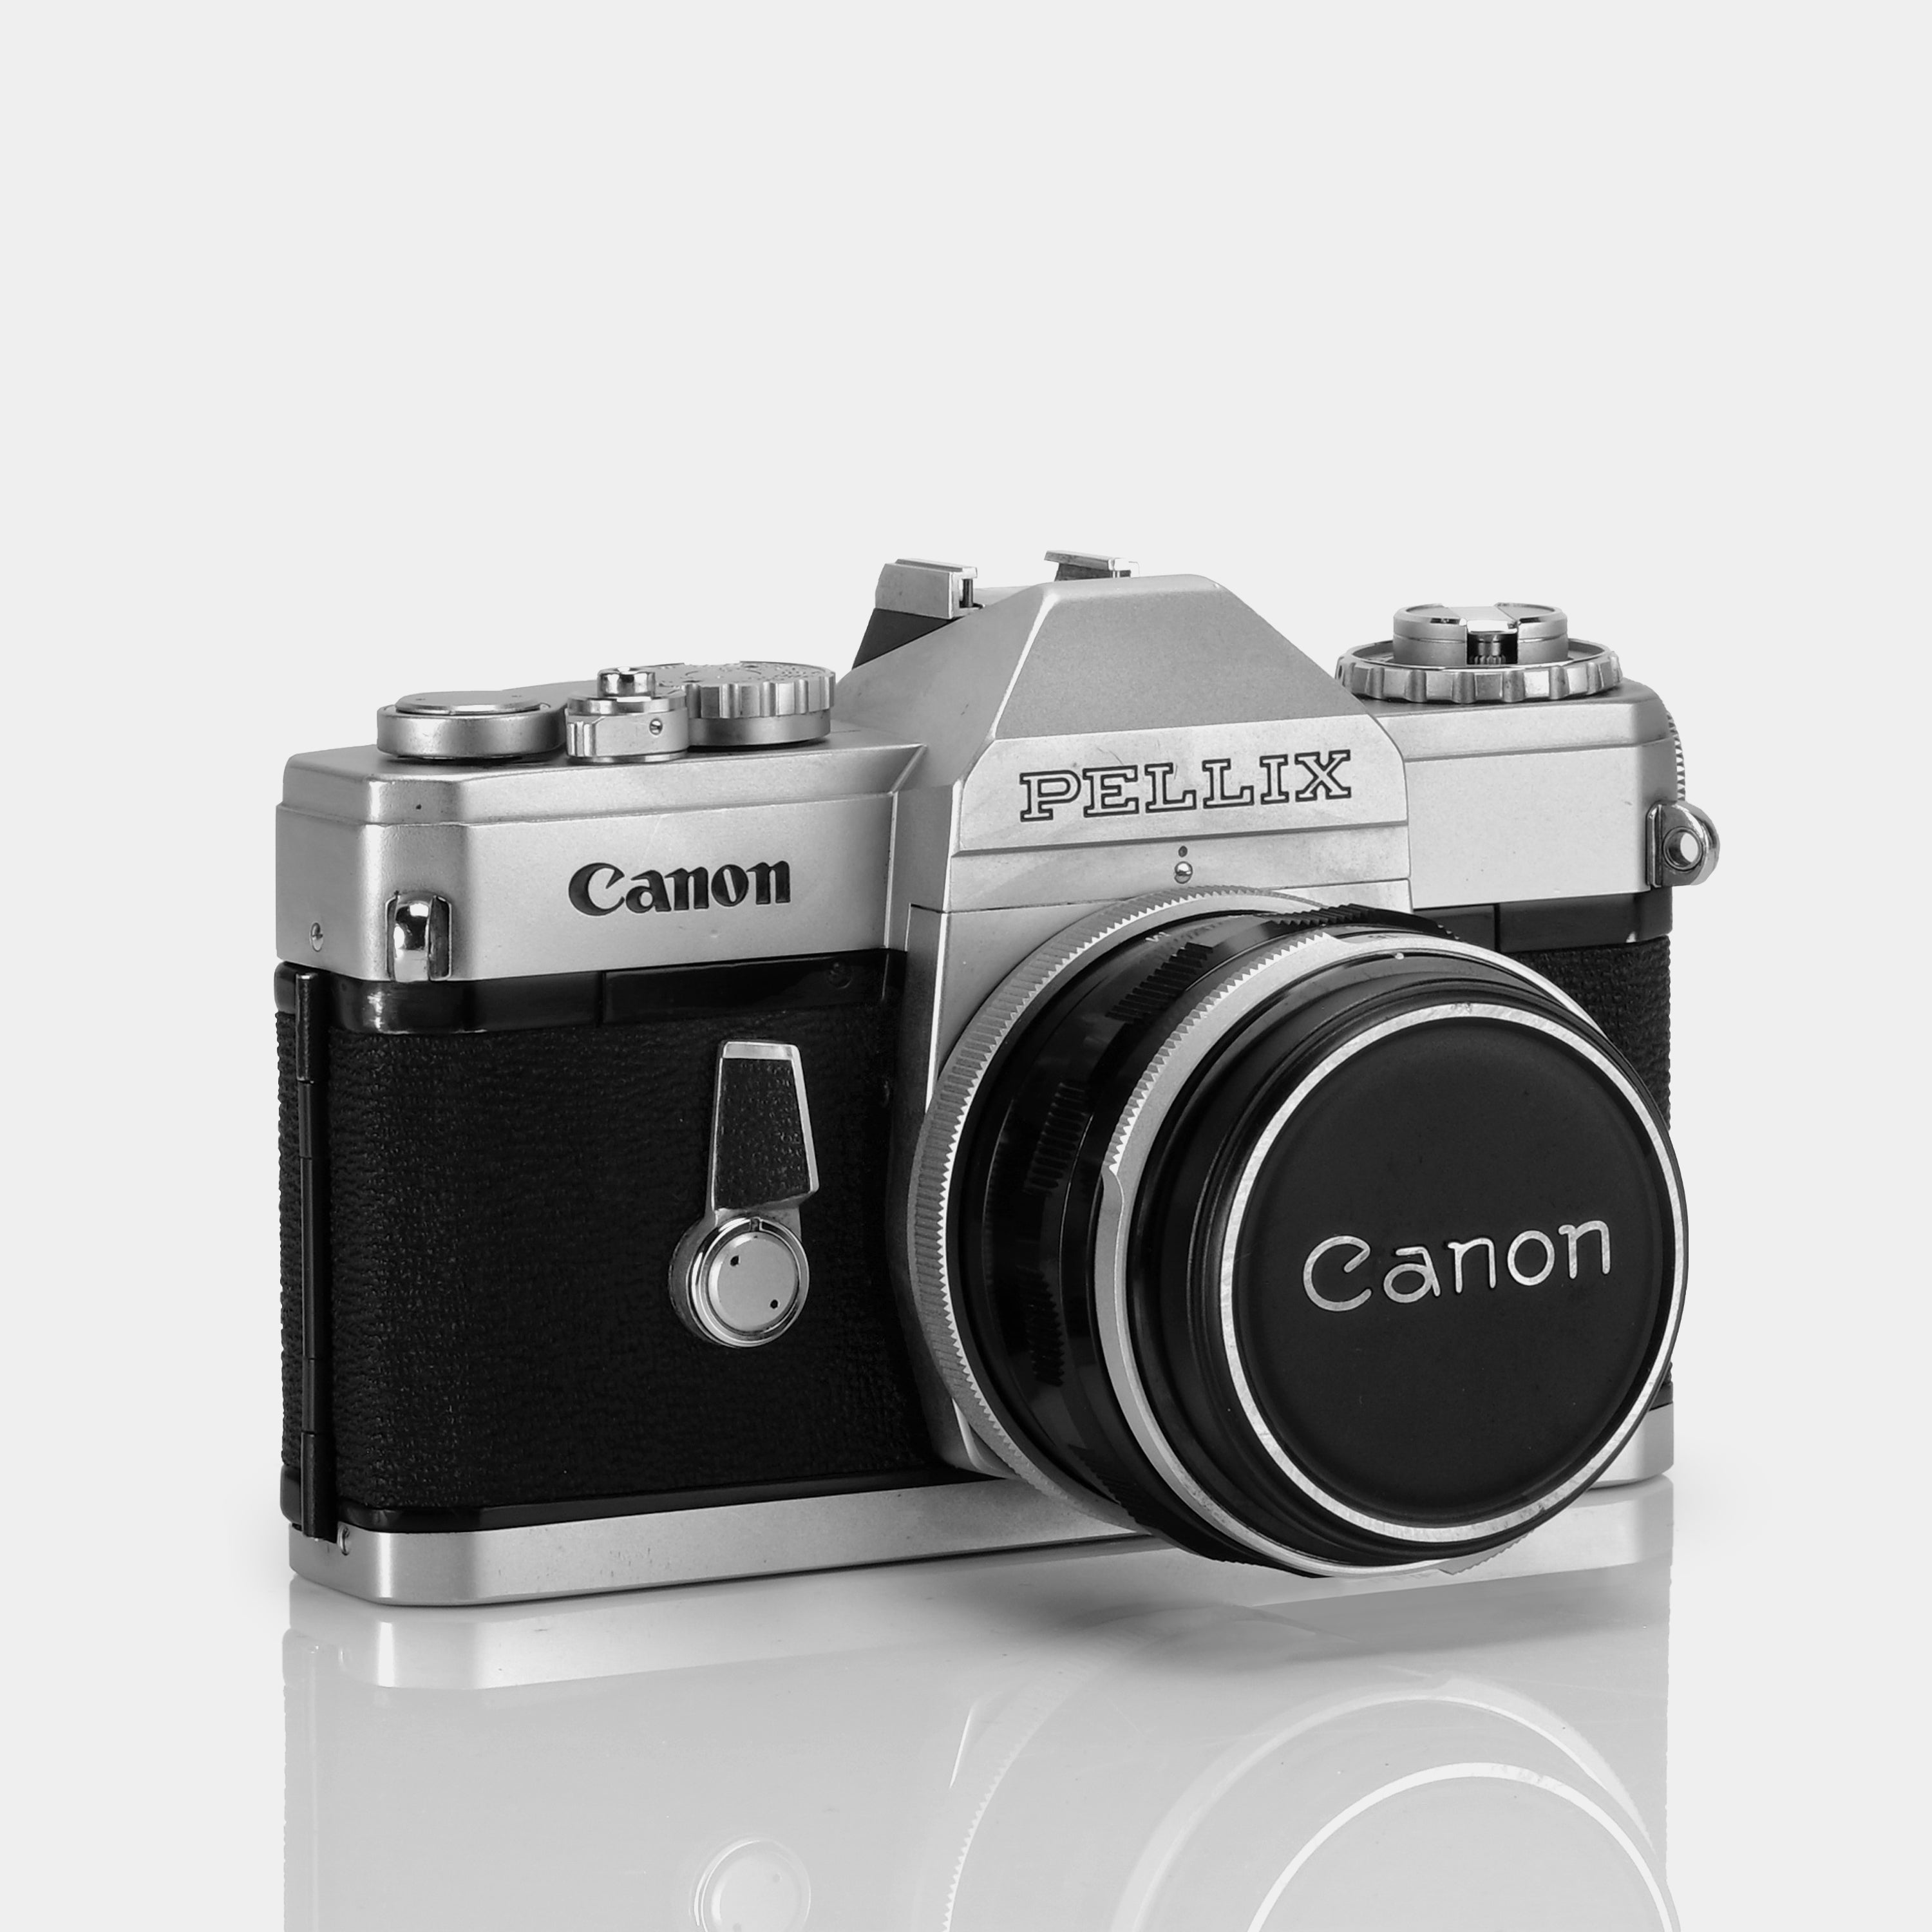 Canon Pellix 35mm SLR Film Camera